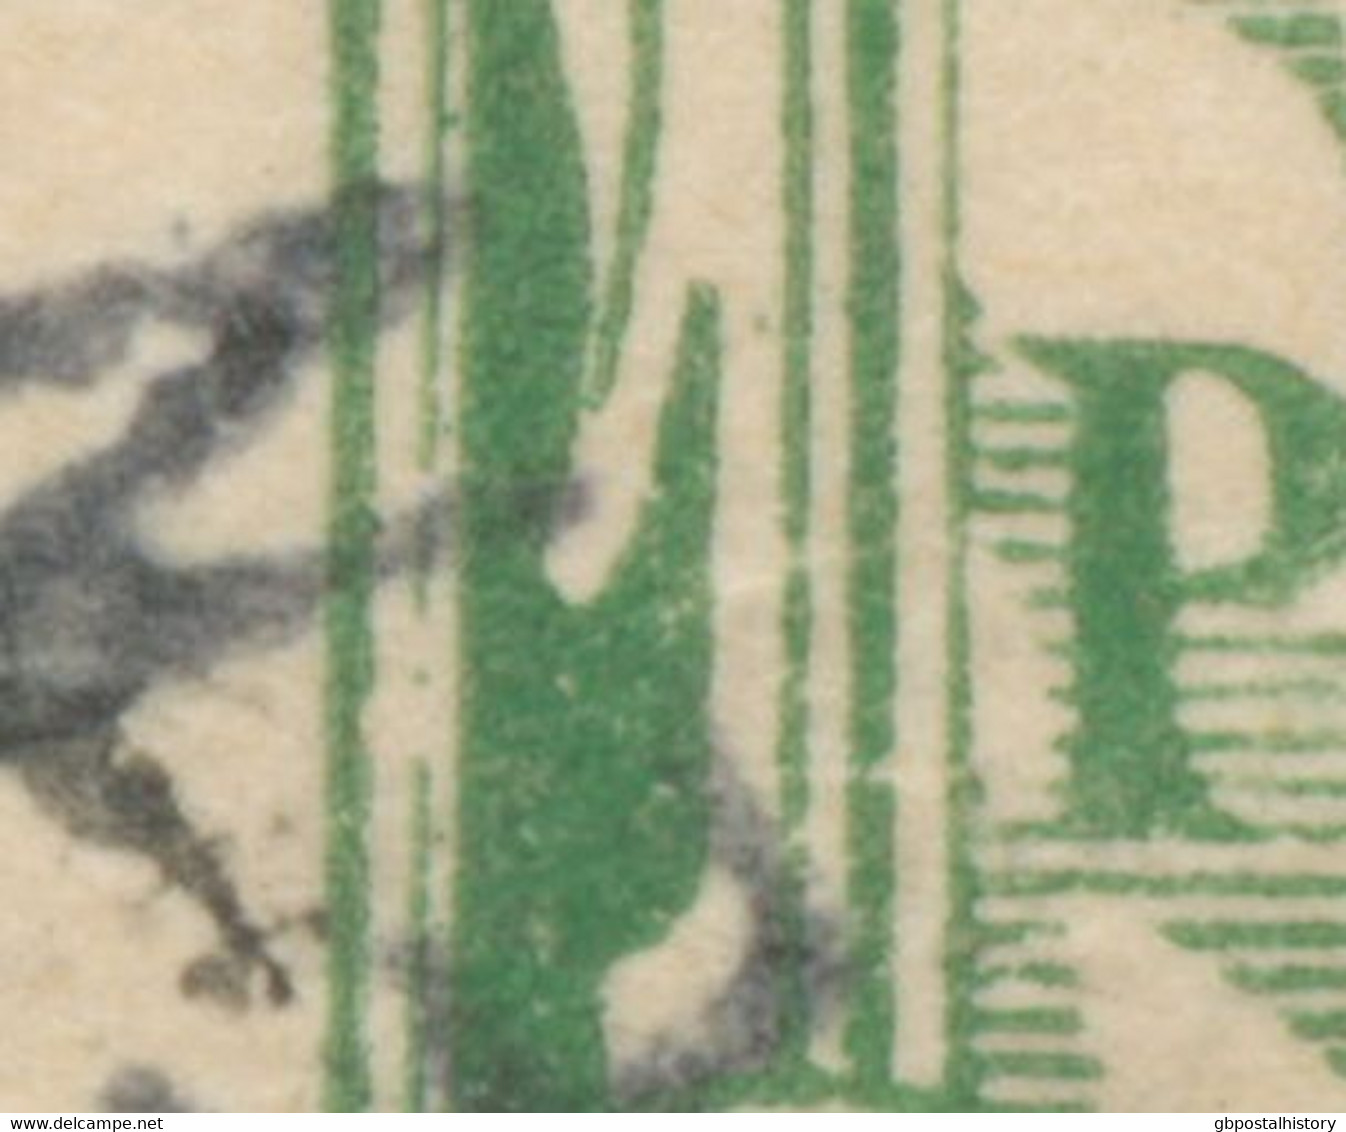 BAYERN ORTSSTEMPEL MUENCHEN 2.B.P. K1 (MÜNCHEN) 1900 5 Pf Rauten GA + K1 REGENSBURG 2. Bhf, ABART: Innere Grüne Rahmen - Postal  Stationery